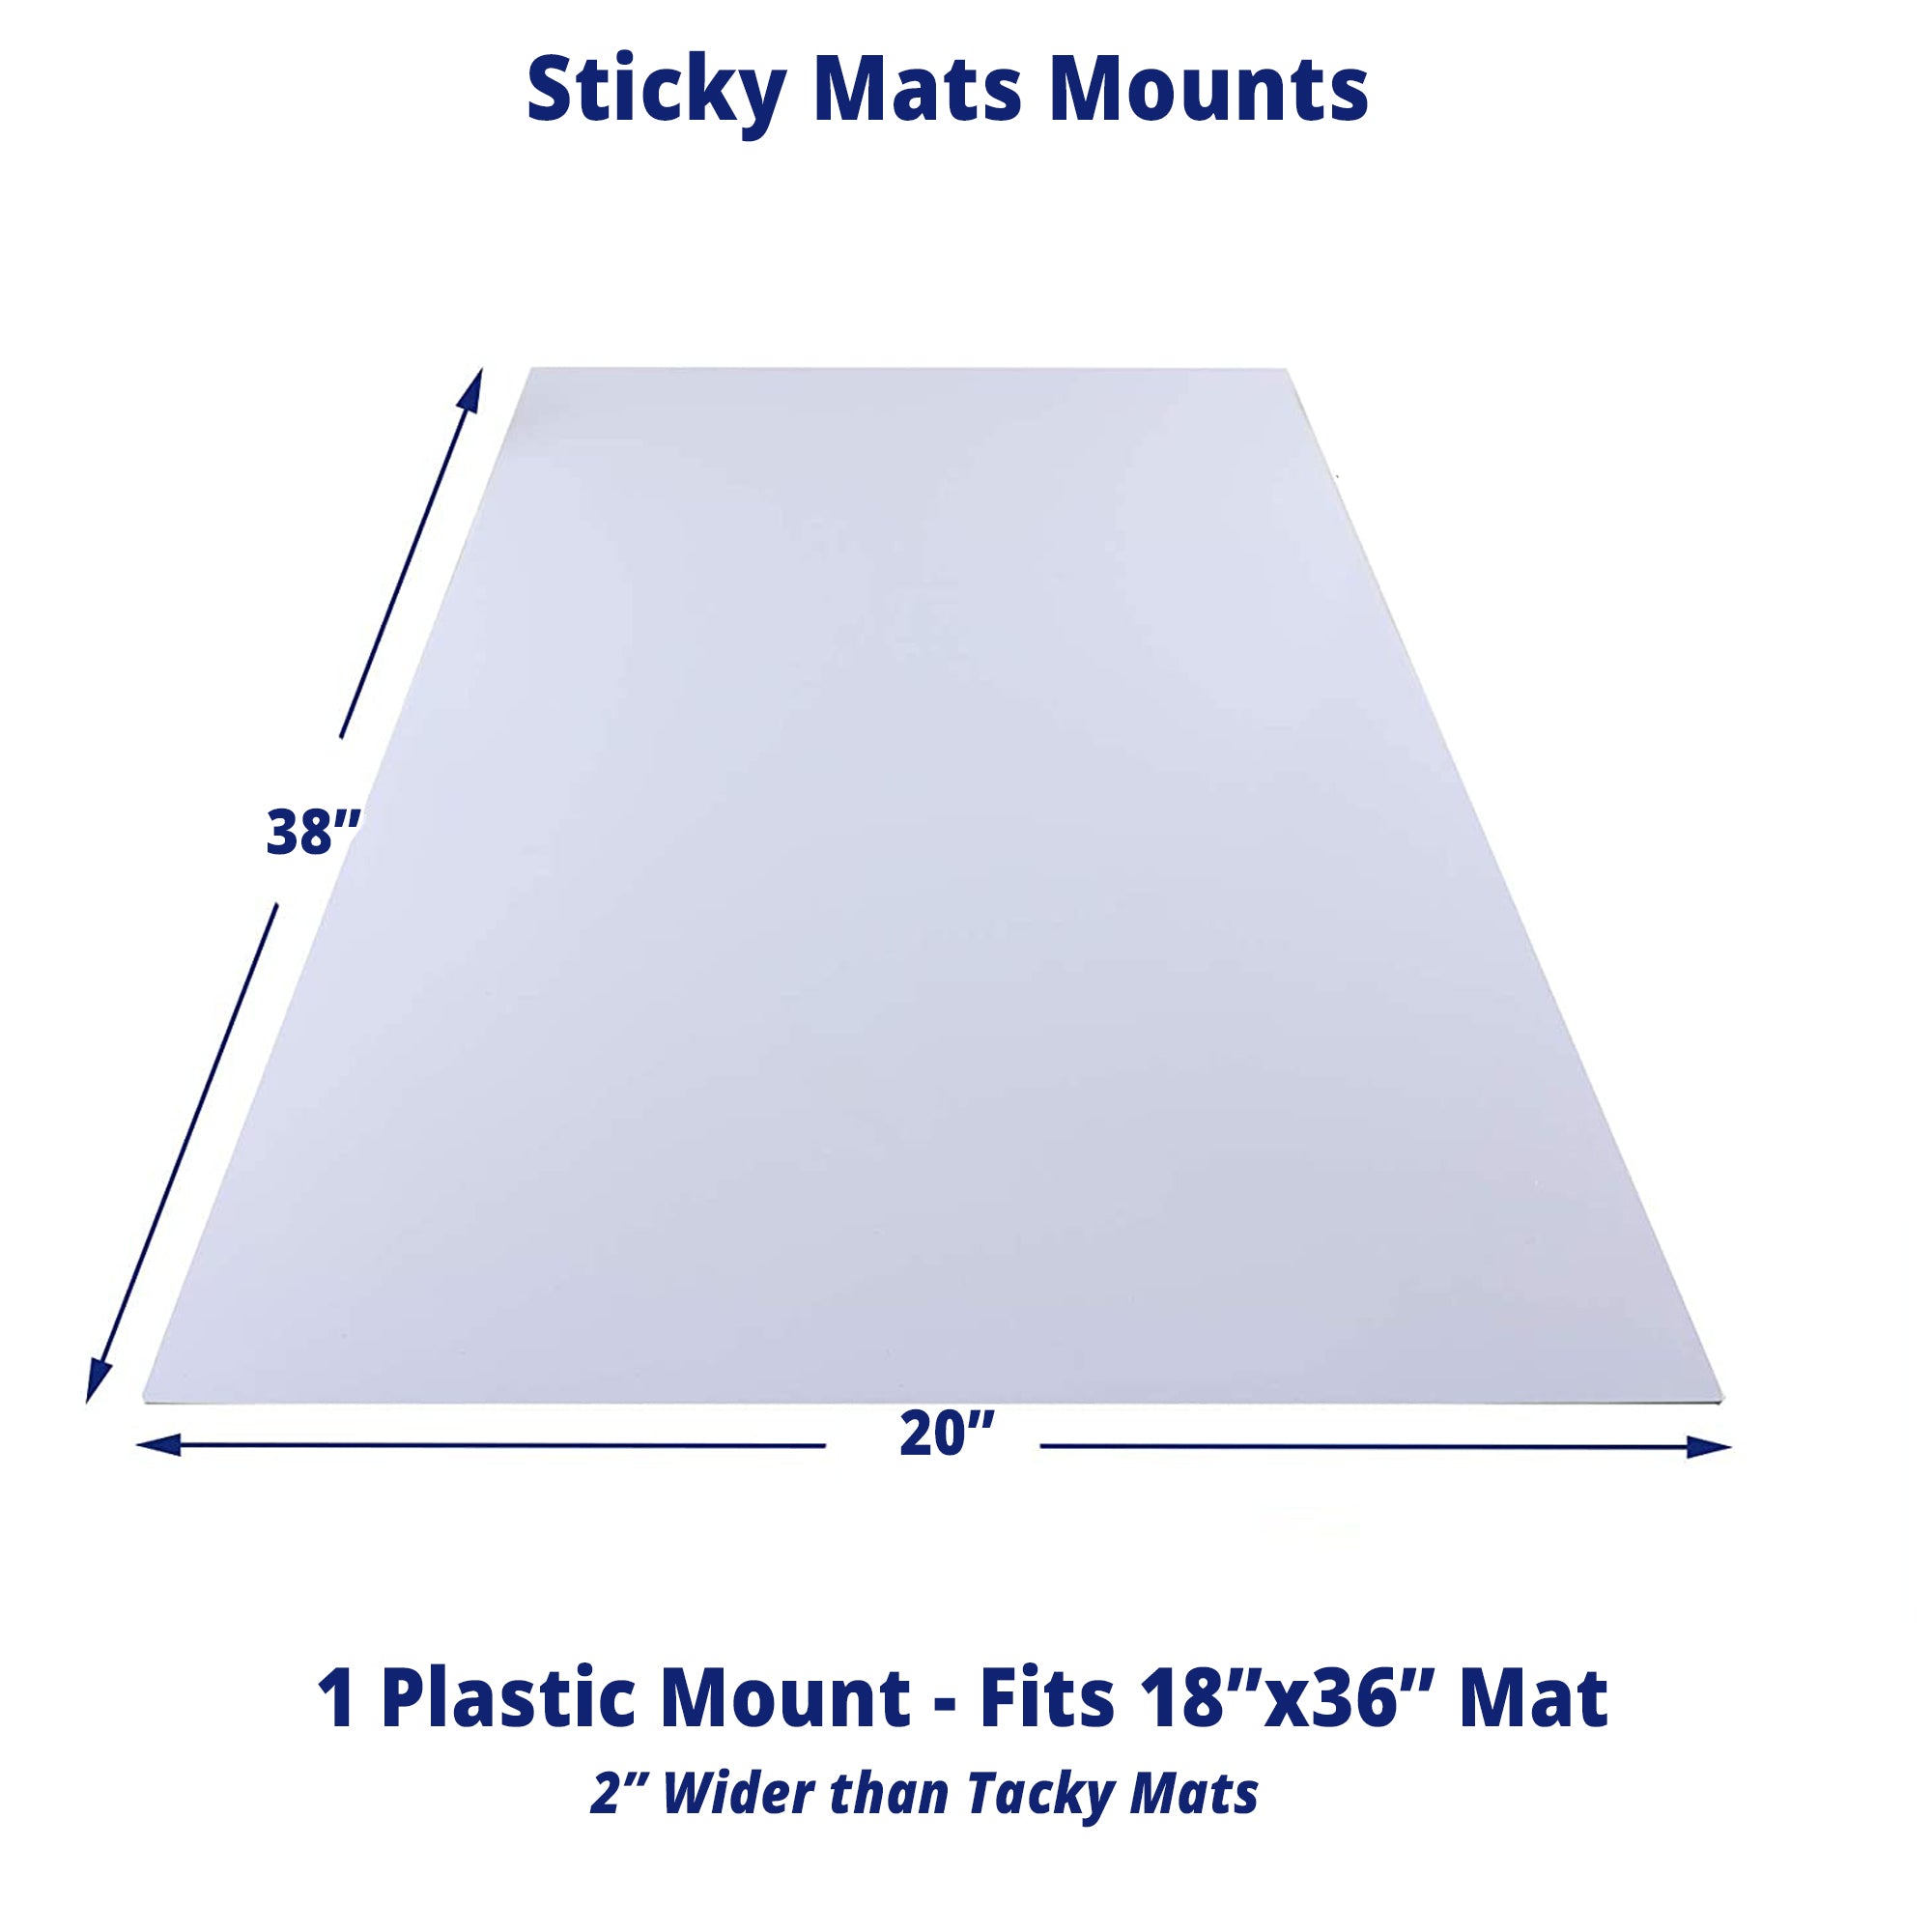 MRO Essentials Tacky Mats Mount - Non Skid Backing for Sticky Mats, Size: 20x38 - Fits 18x36 Mat